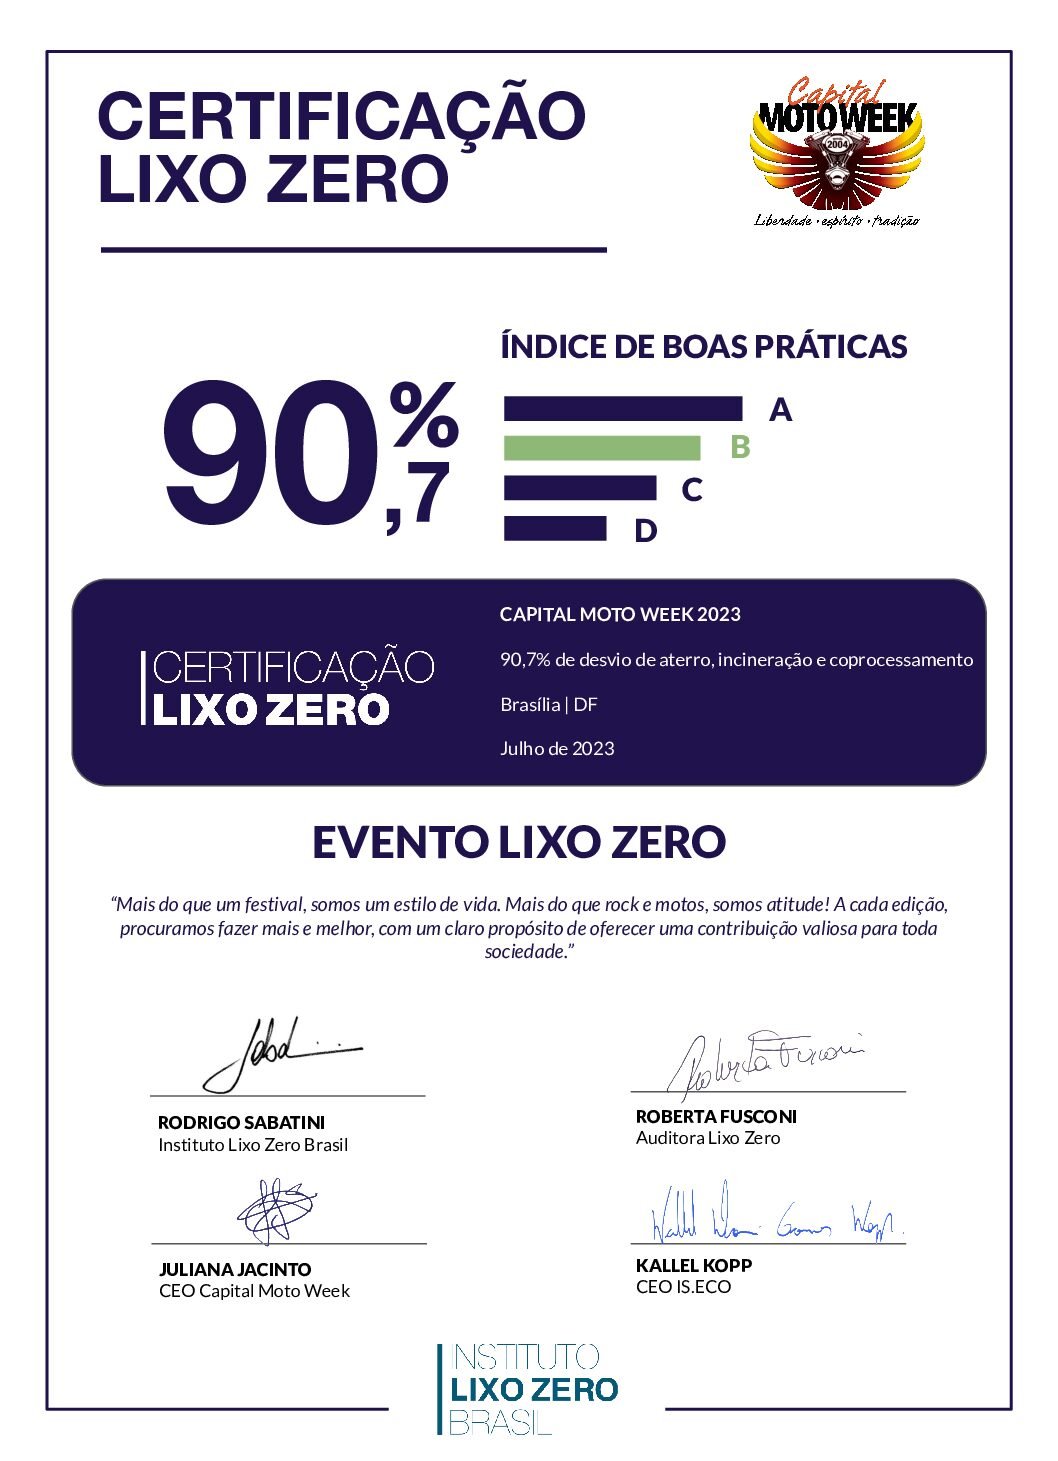 CertificaçãoLixoZero_Capital_Moto_Week_DF_2023